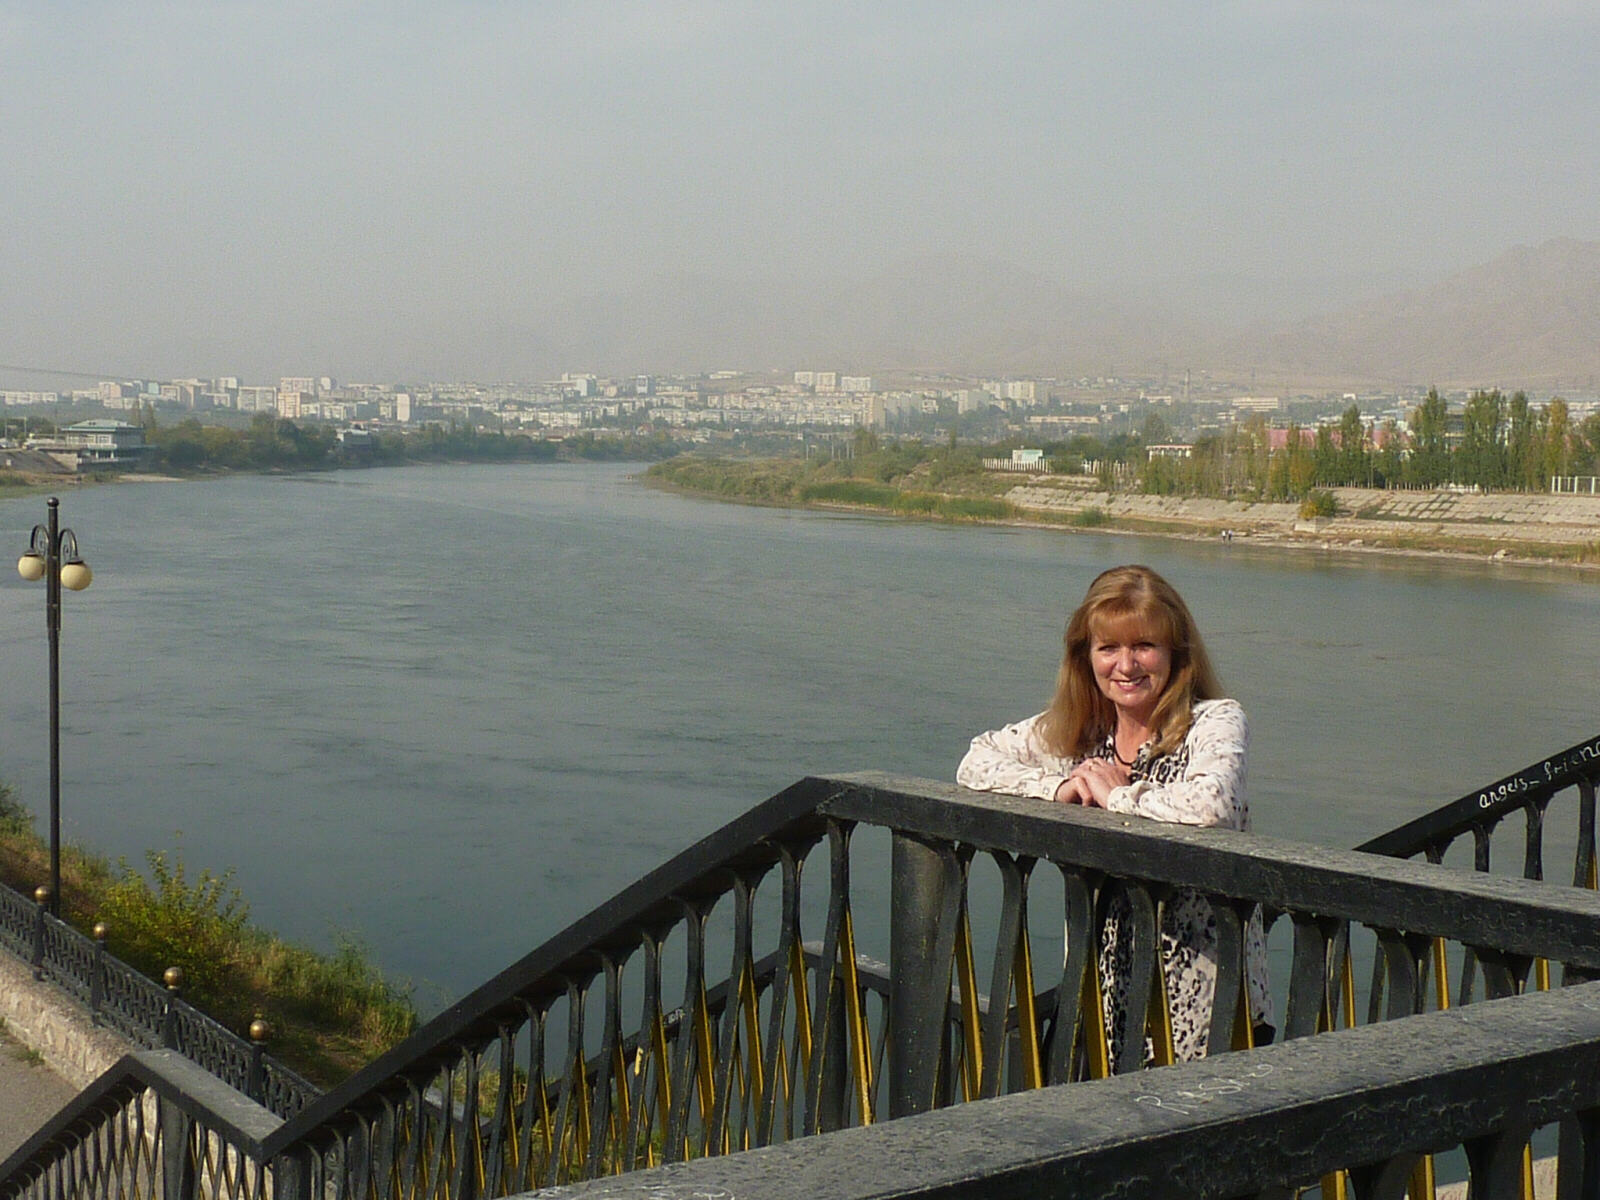 The Syr Daria river at Khojand, Tajikistan